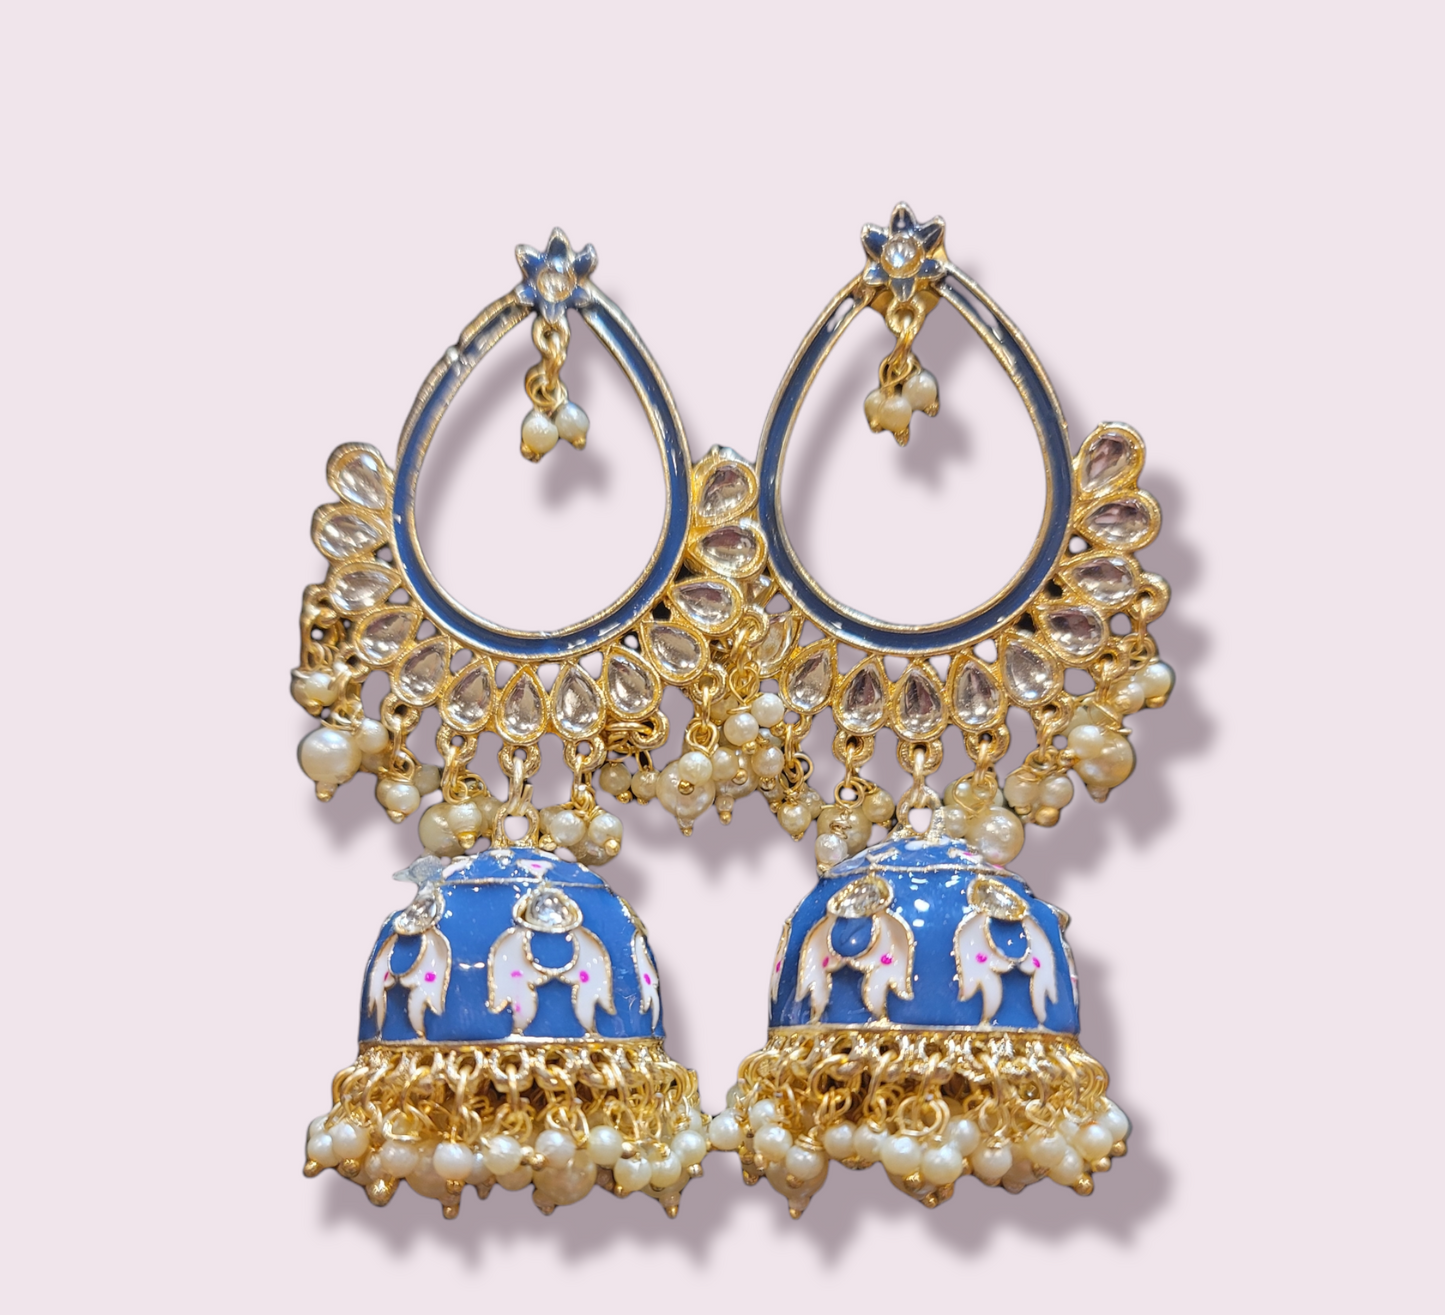 Meenakari Jhumki earrings